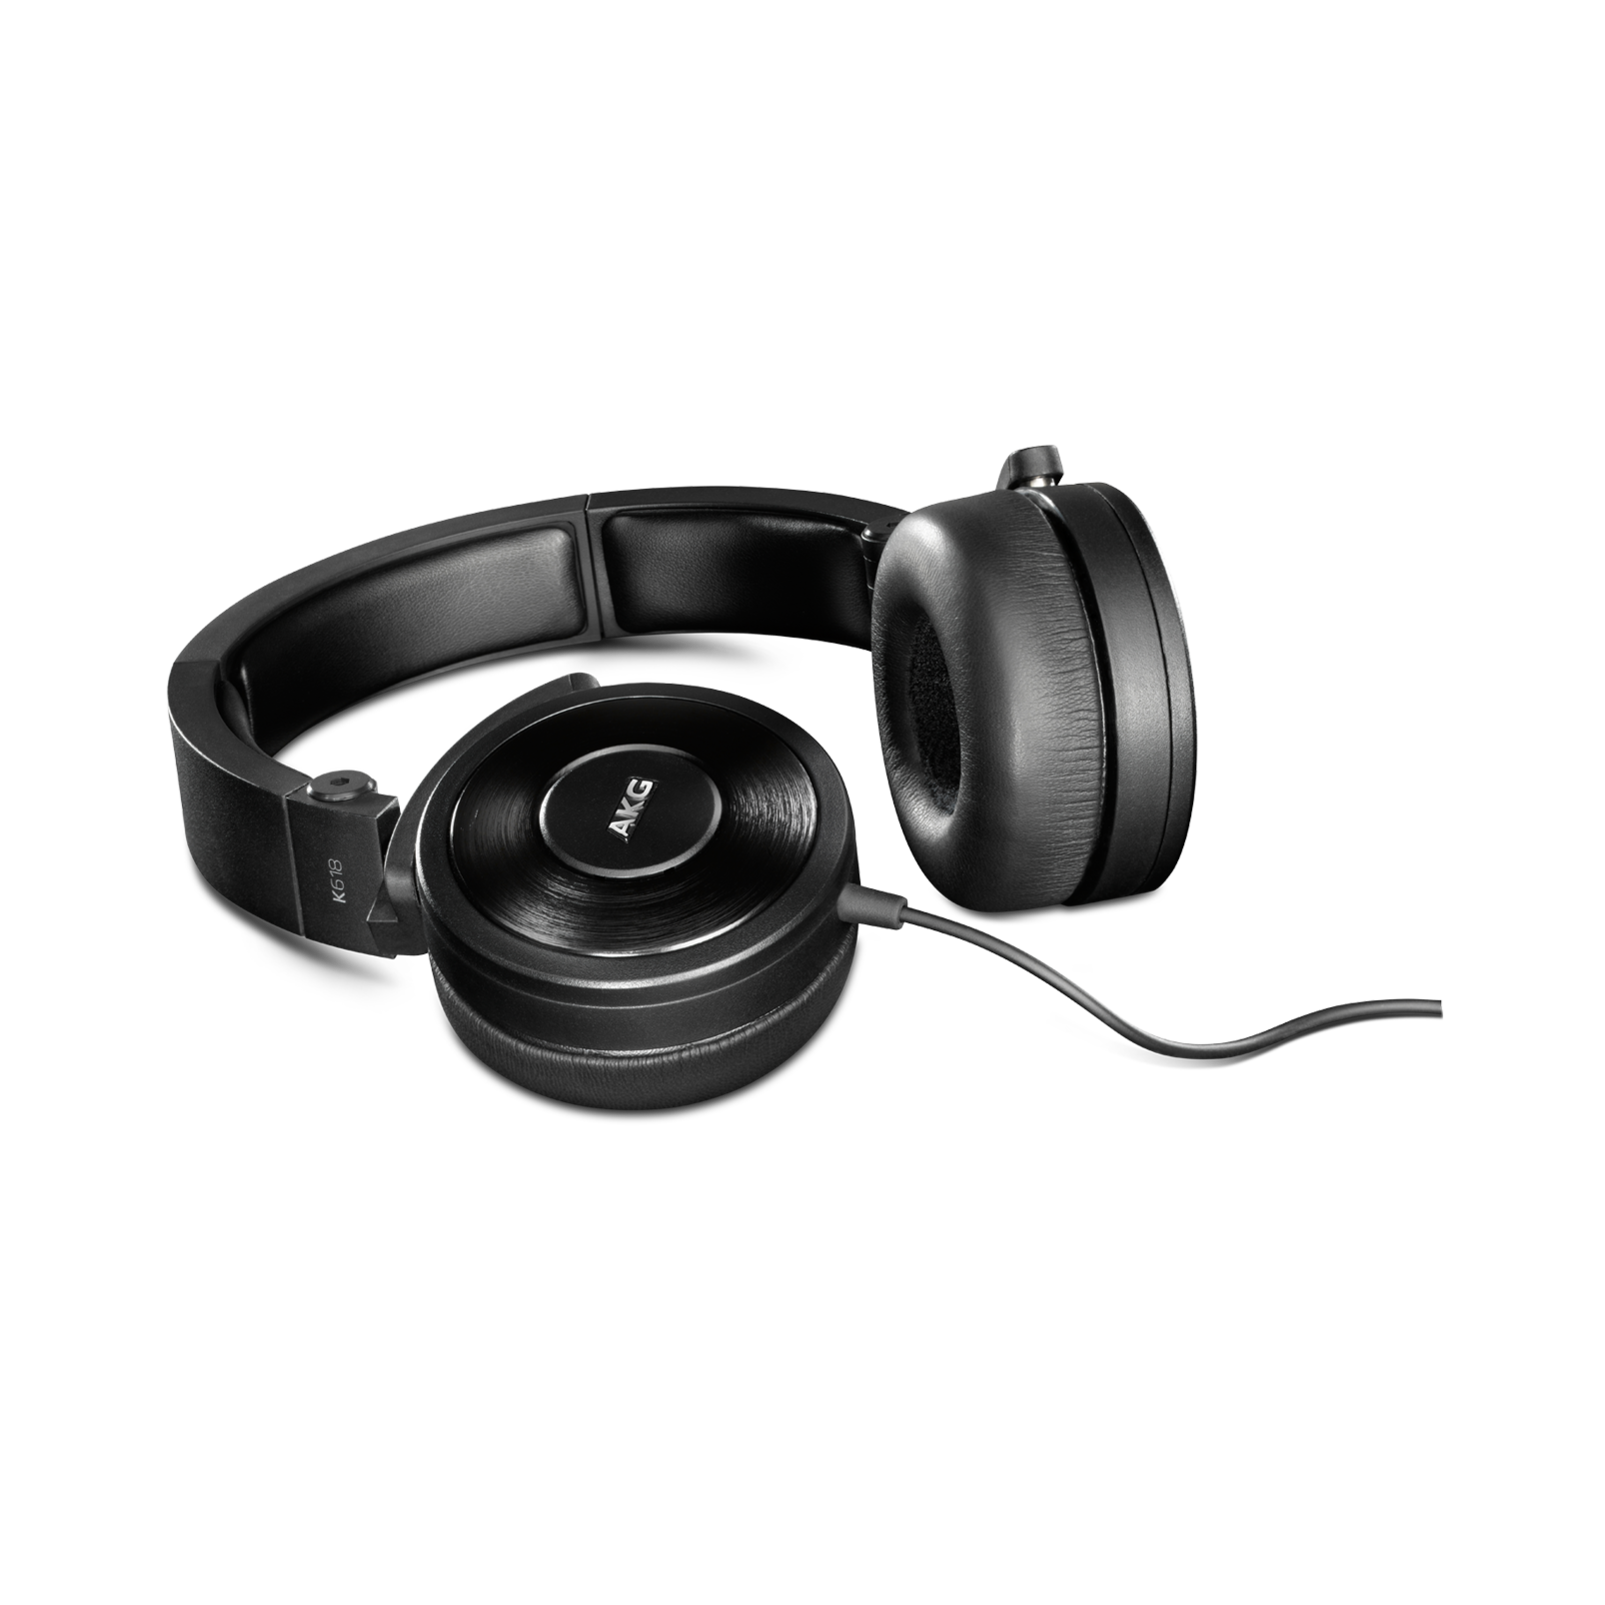 K 618 - Black - High-performance DJ headphones. - Detailshot 2